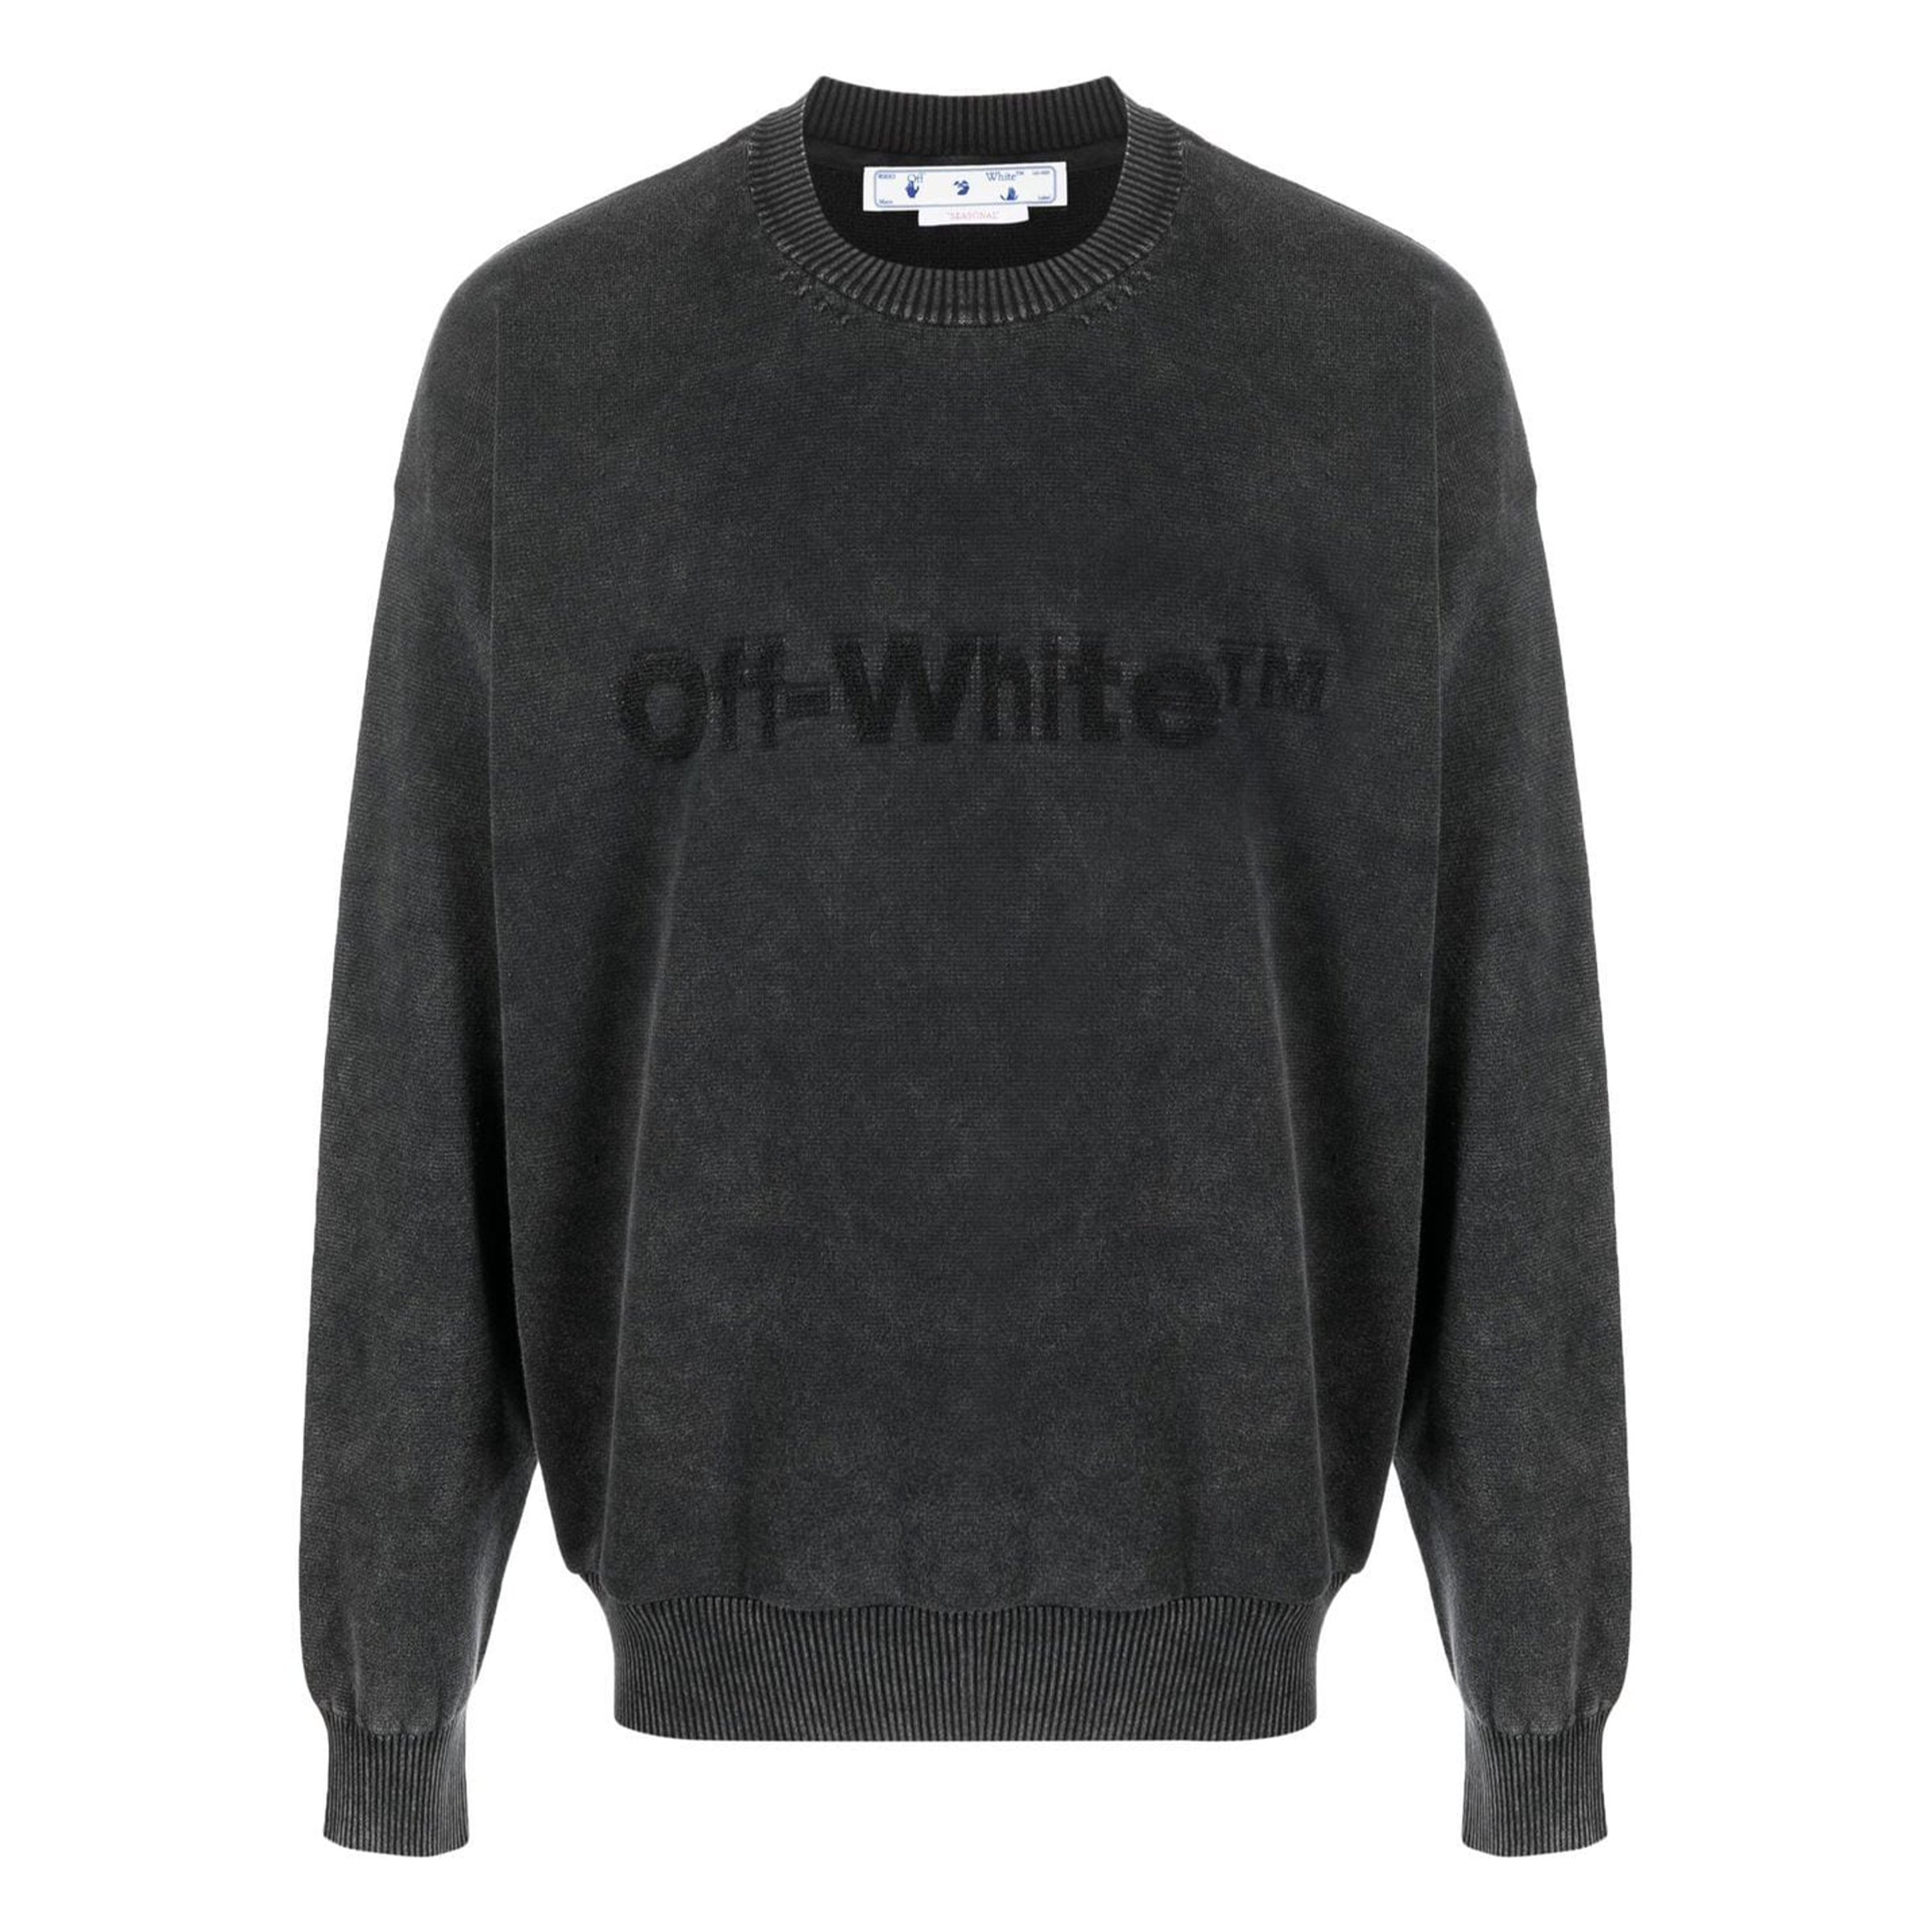 Off-White "Black Laundry" Sweatshirt